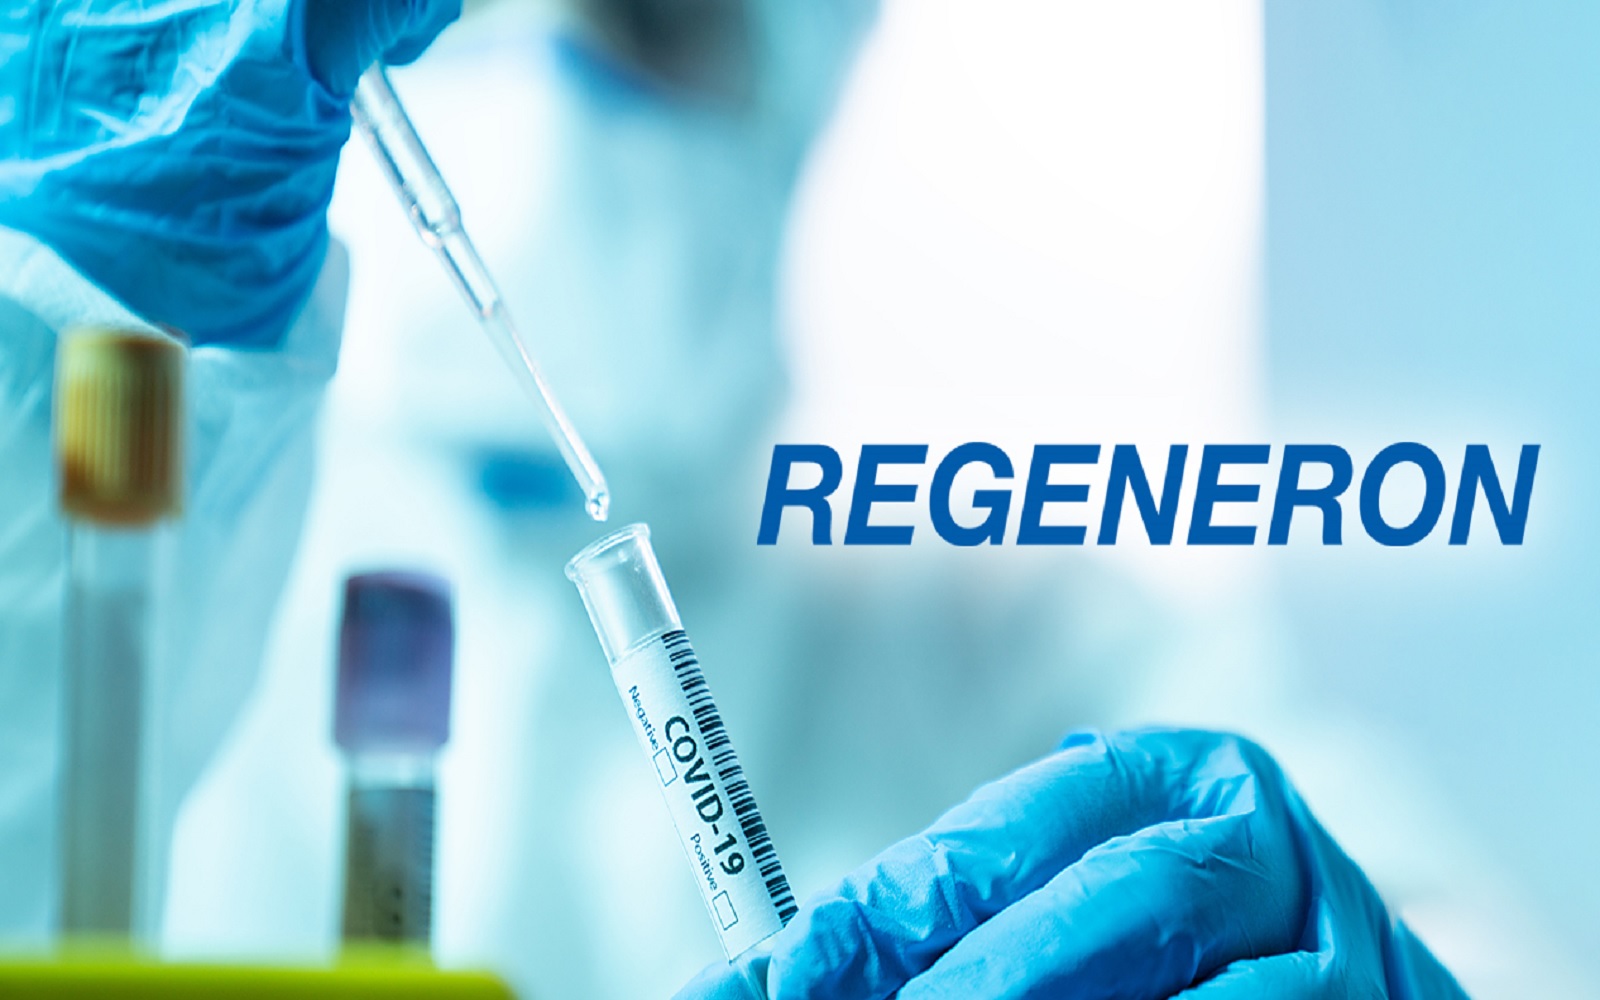 Regeneron αντισώματα: Εκτιμήσεις για παραγωγή 300.000 δόσεων κοκτέιλ κορωνοϊού